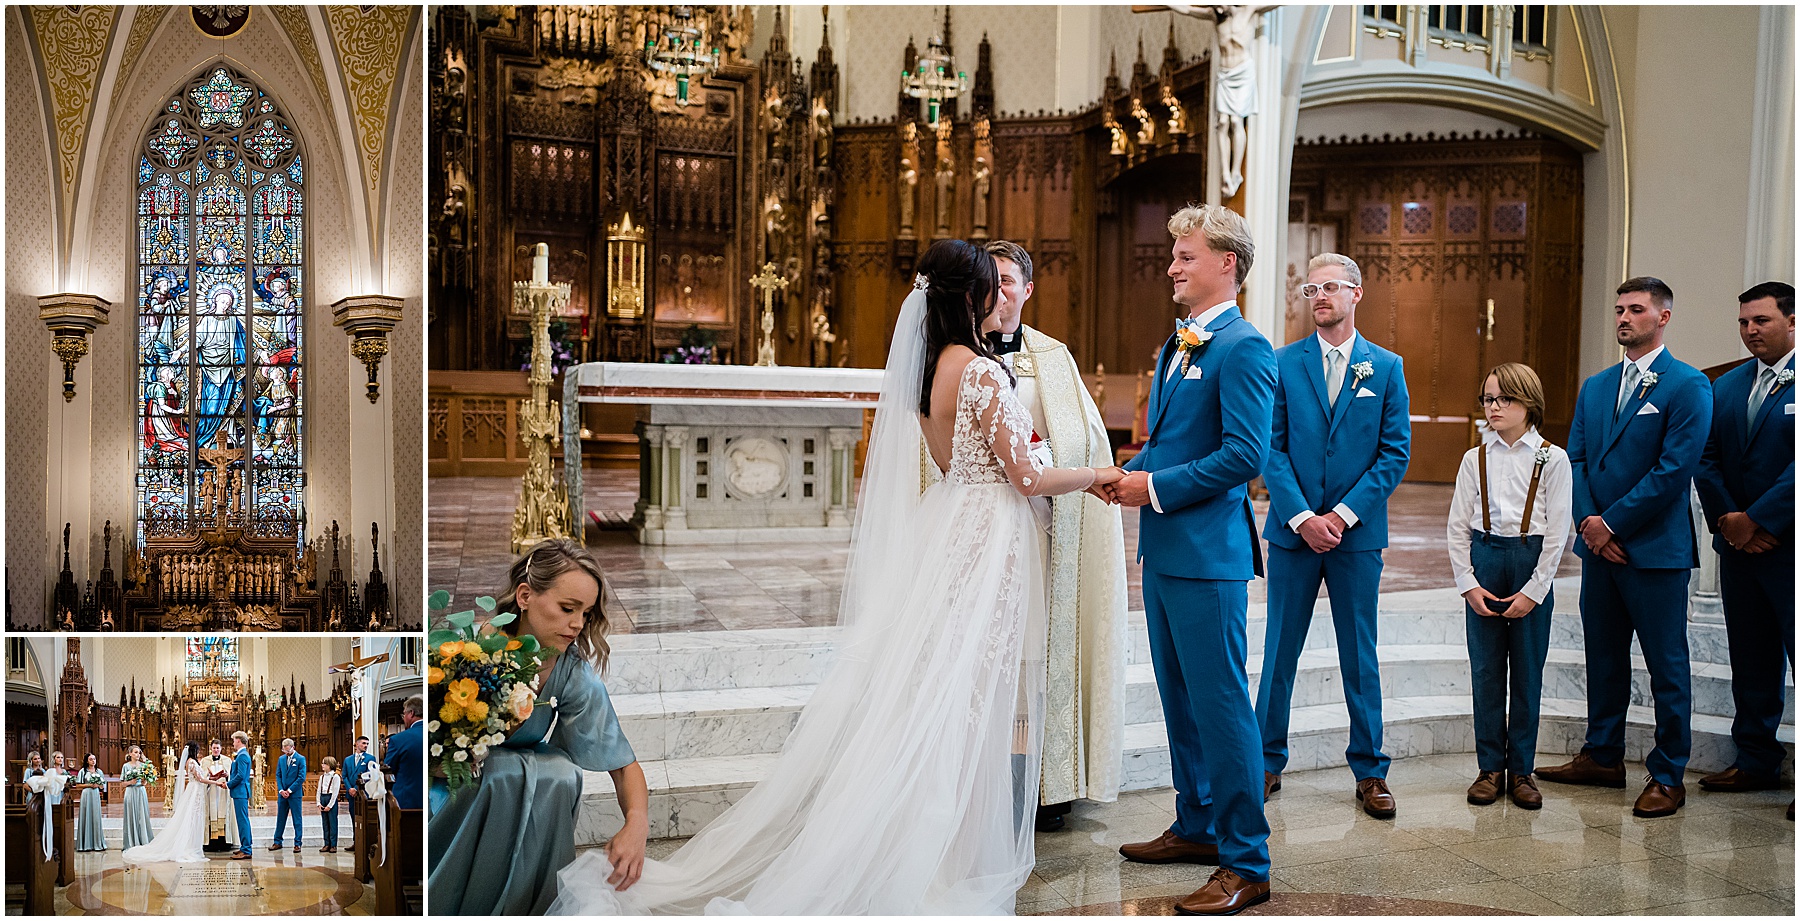 Fort Wayne wedding photographers capture bride and groom holding hands during wedding ceremony